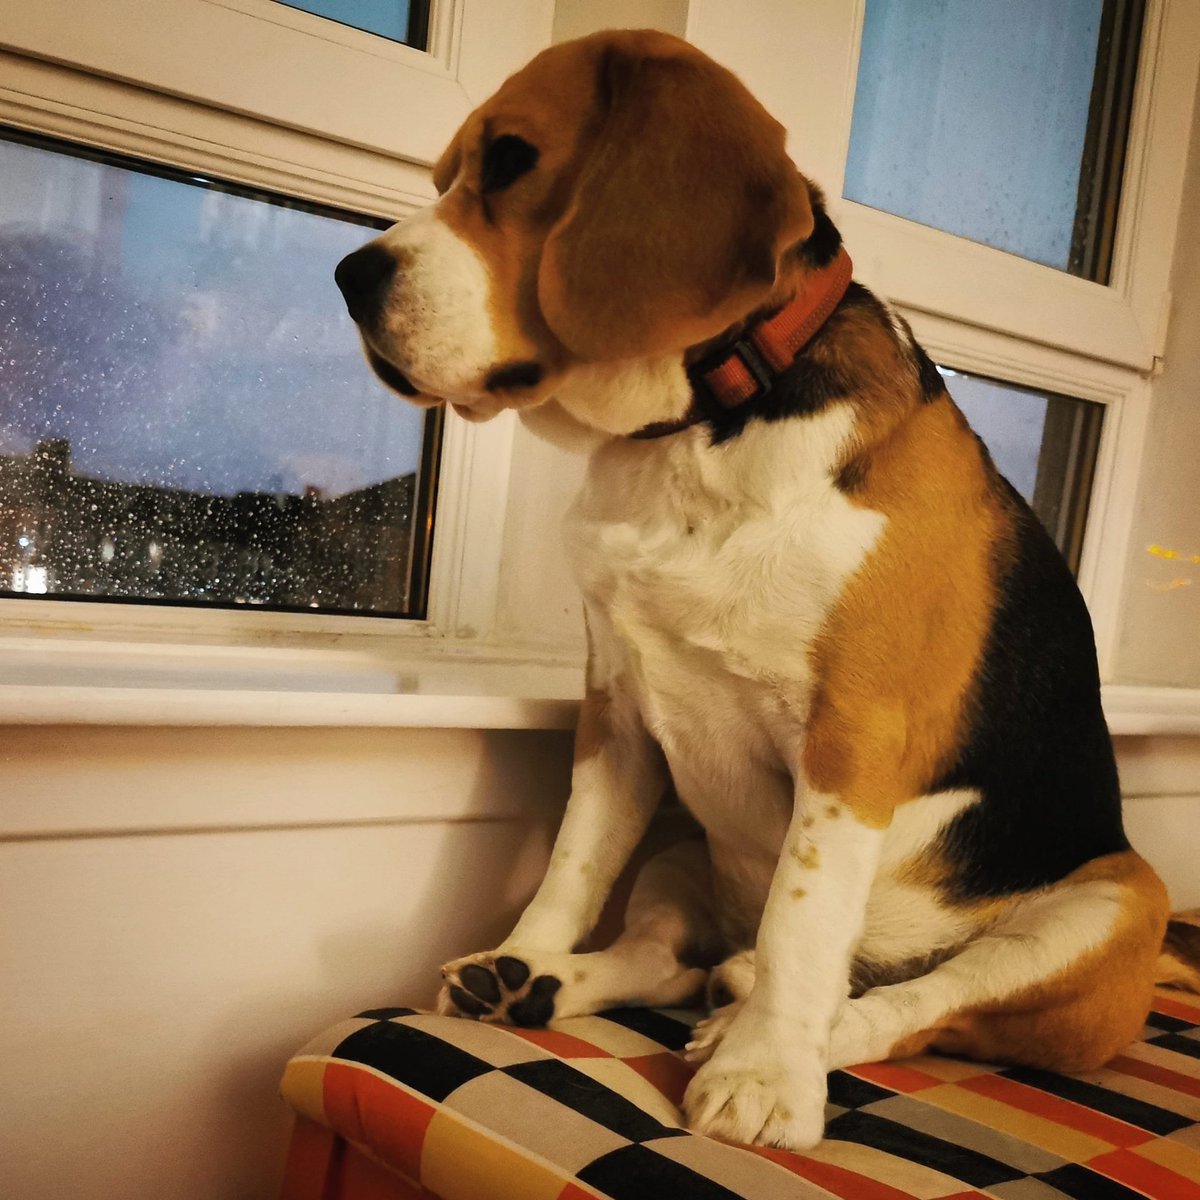 Watching over the neighborhood

#beagle #beaglepuppy #beaglesofglasgow #houndsofglasgow #hounddog #dogsofglasgow #familypack #monsterpups #biggestmonsterpup #neighbourhoodwatch #dennistoun